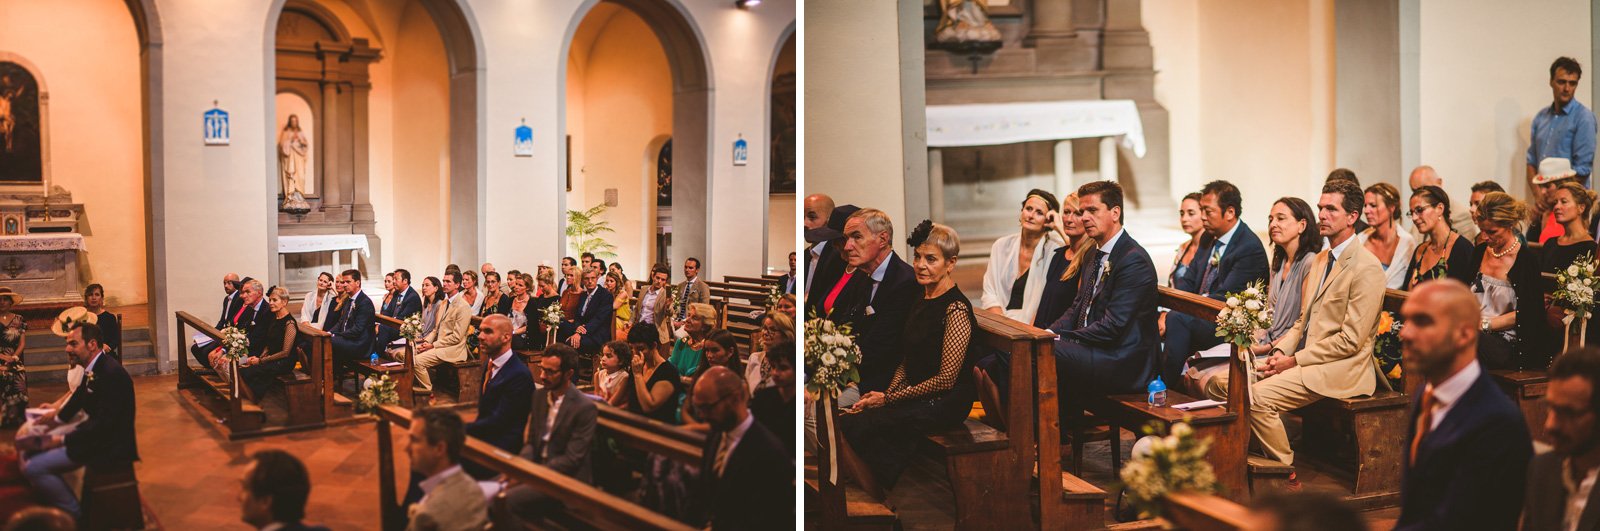 Lovely Wedding in Villa at Rignana by Federico Pannacci Wedding Photographer 37